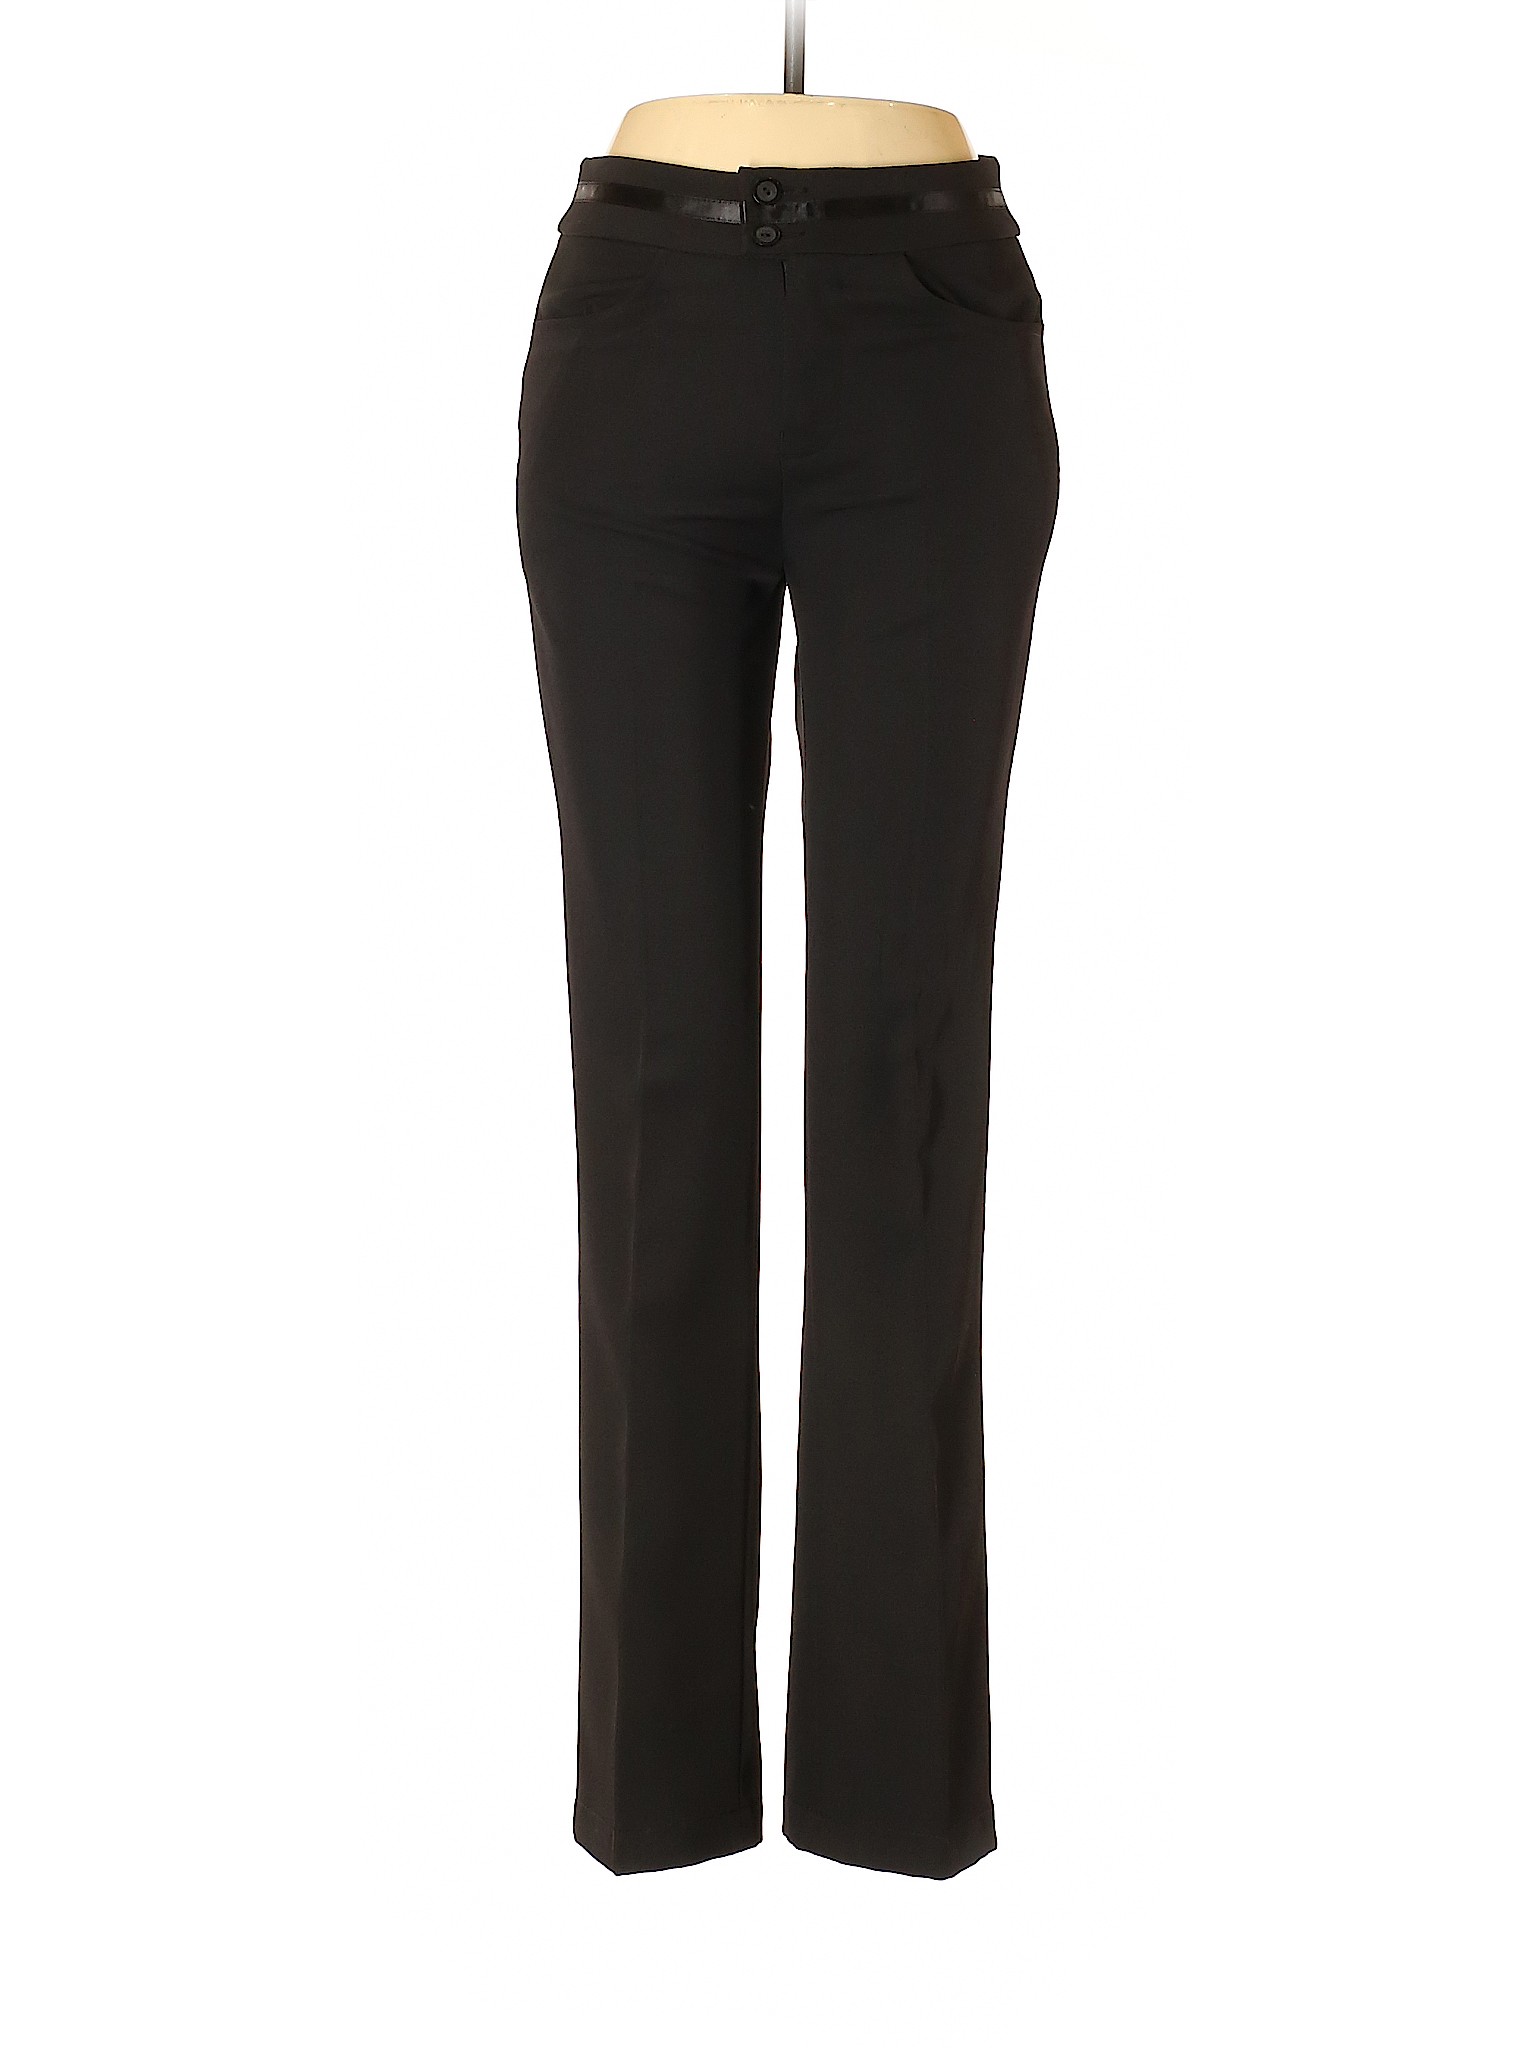 Assorted Brands Women Black Dress Pants M | eBay